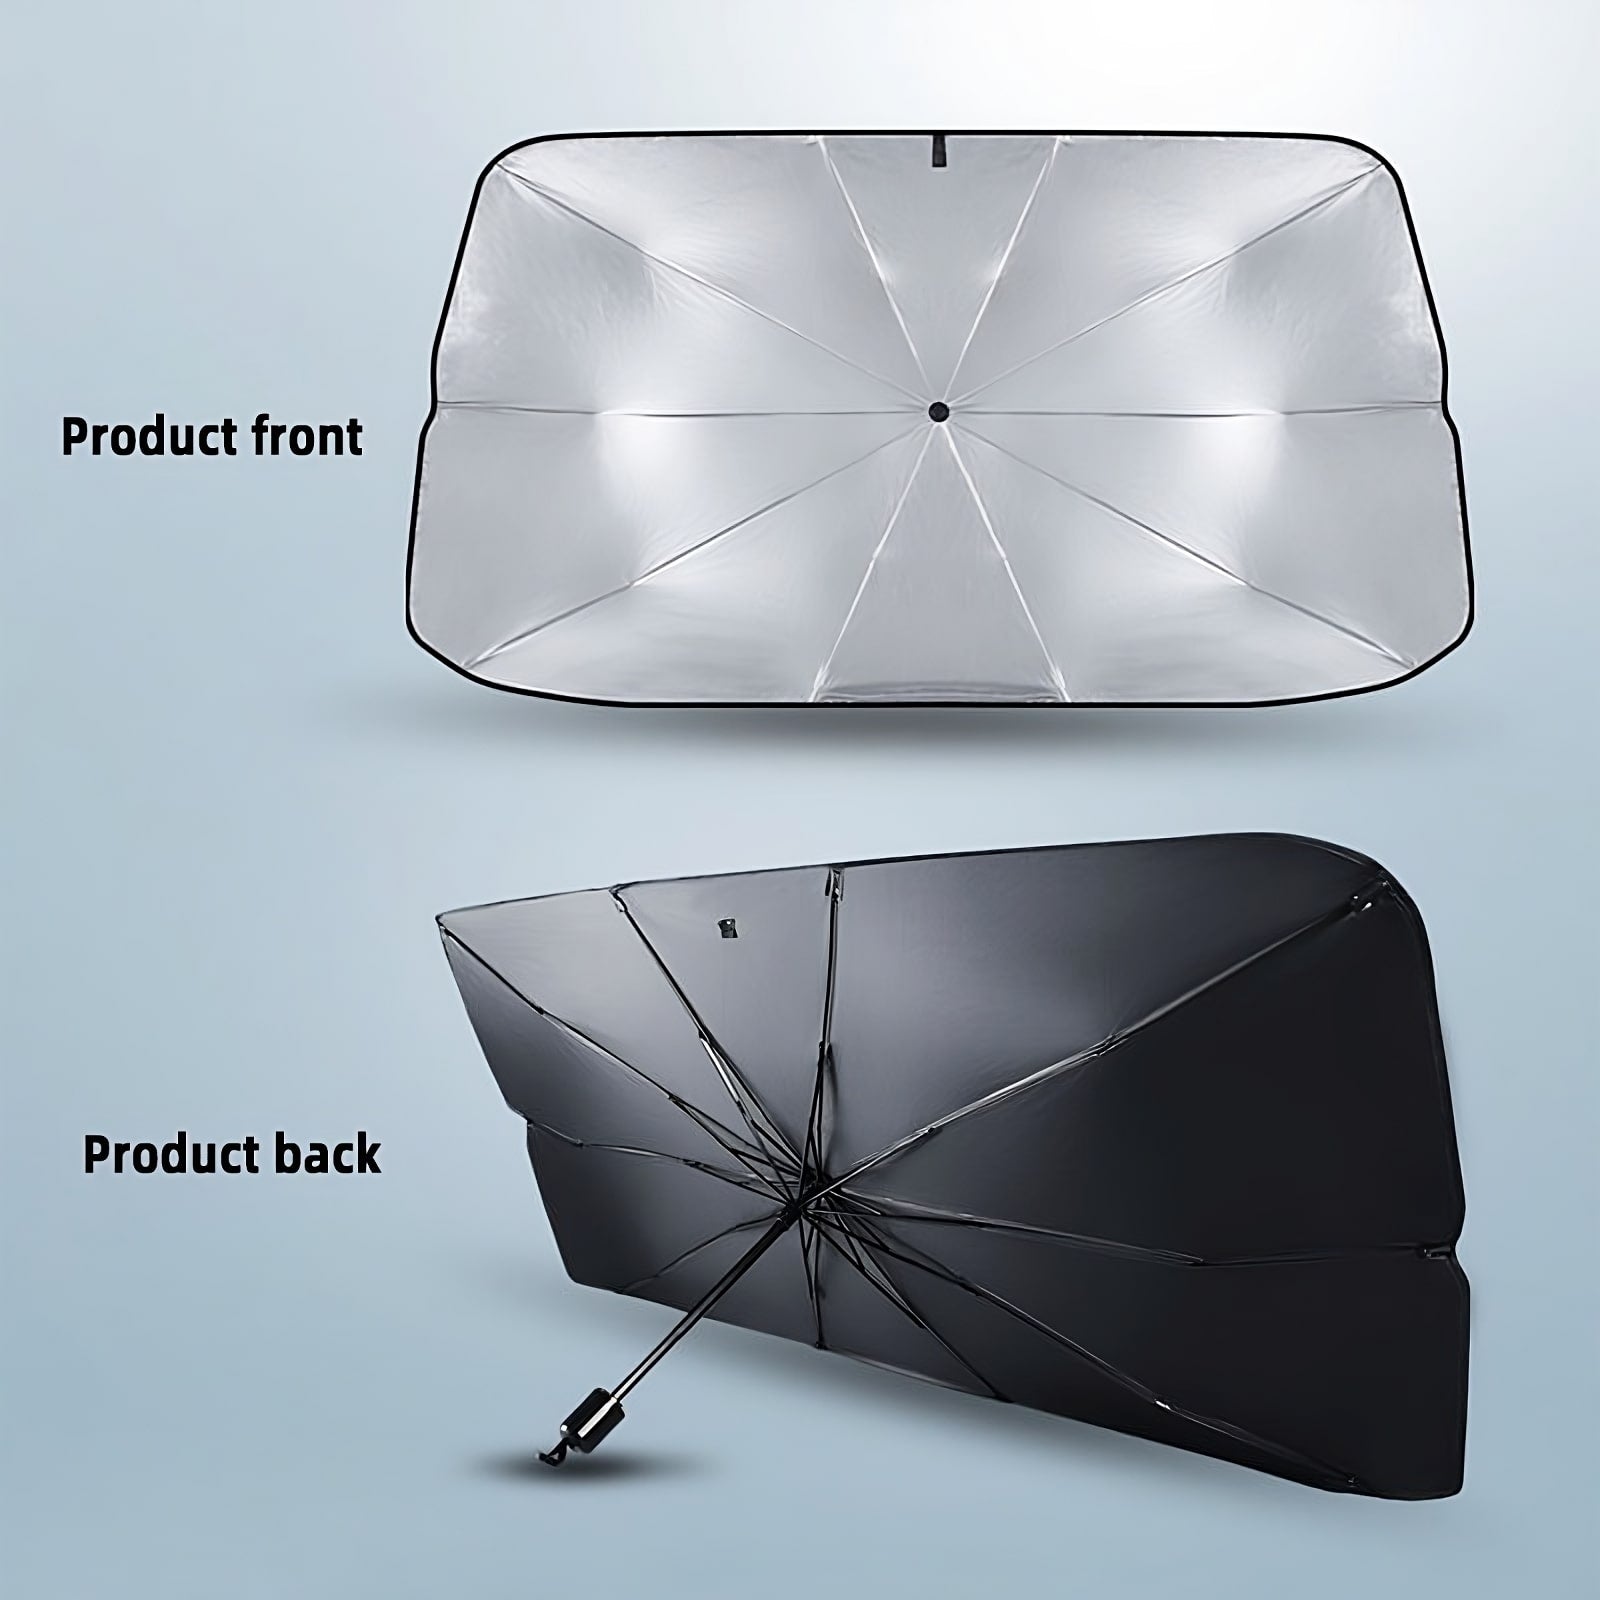 The Windshield Umbrella™ – thewindshieldumbrella